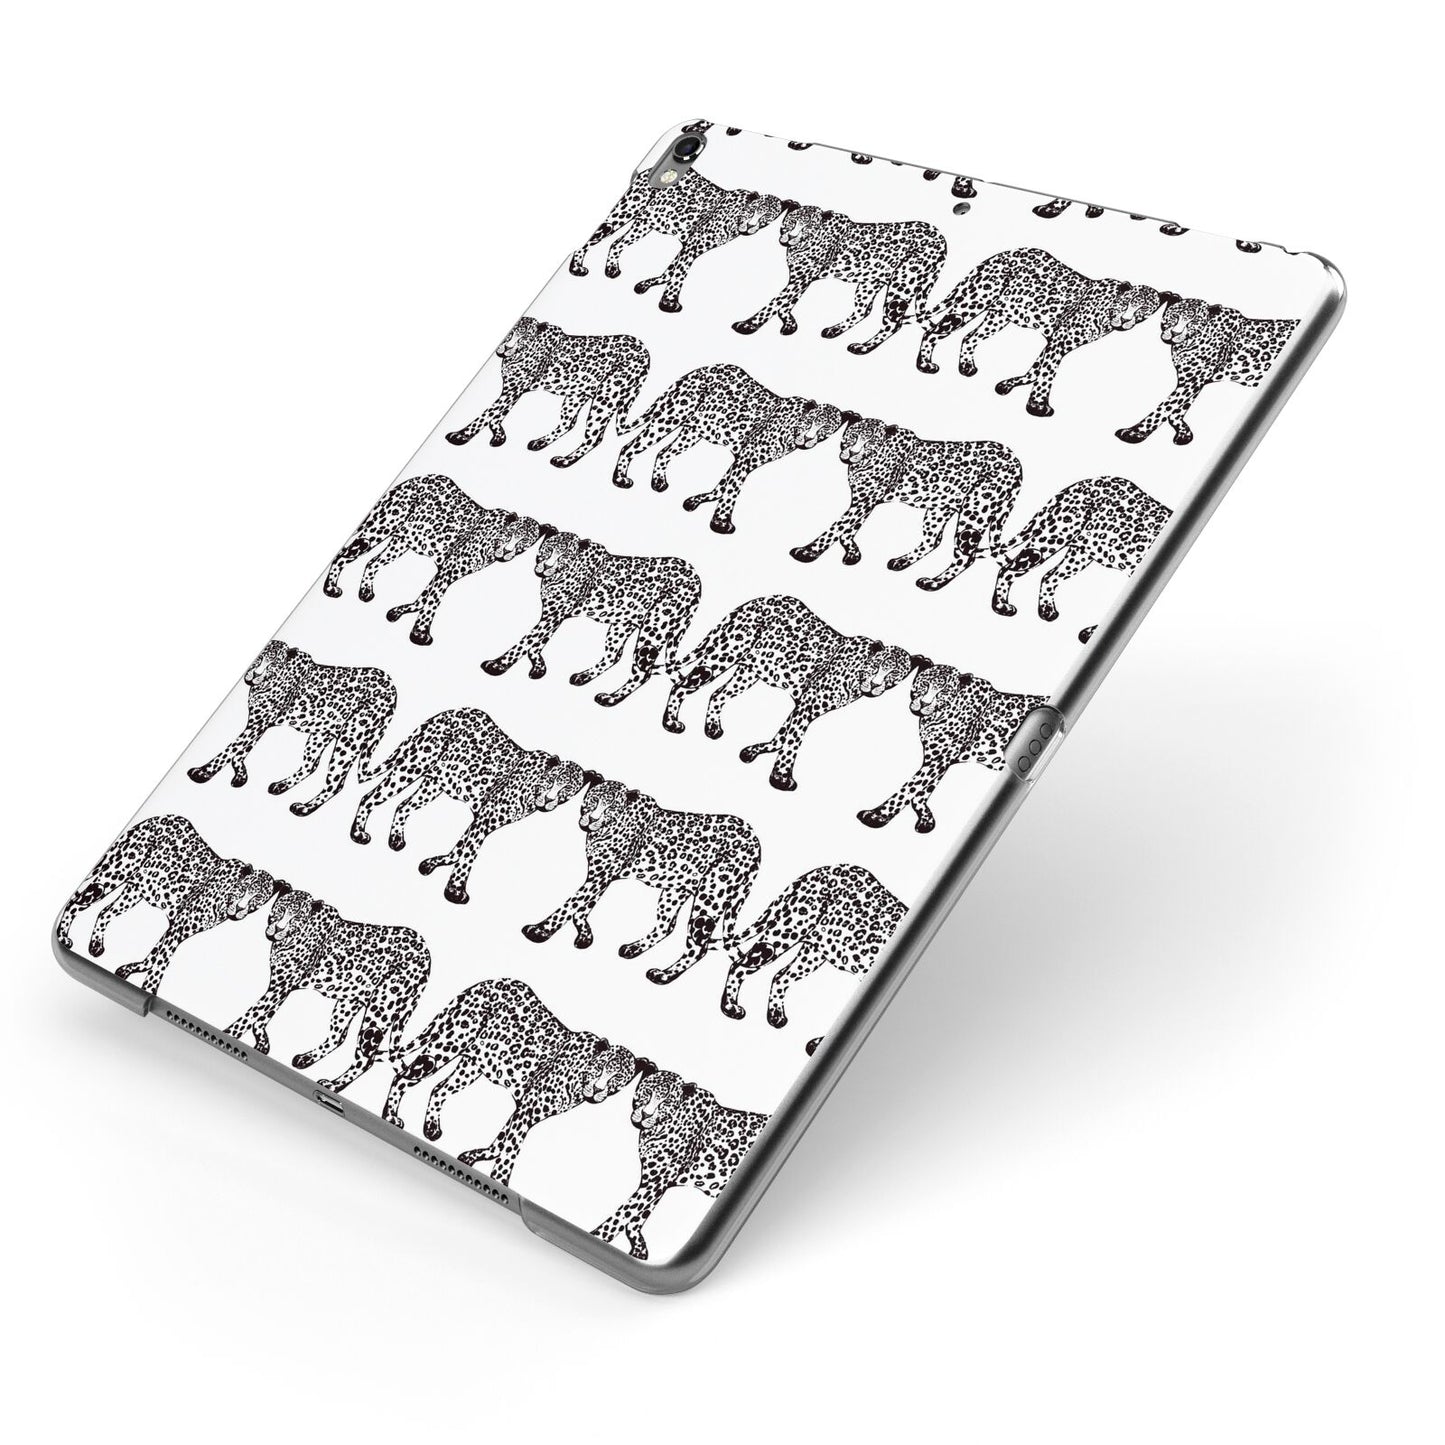 Monochrome Mirrored Leopard Print Apple iPad Case on Grey iPad Side View